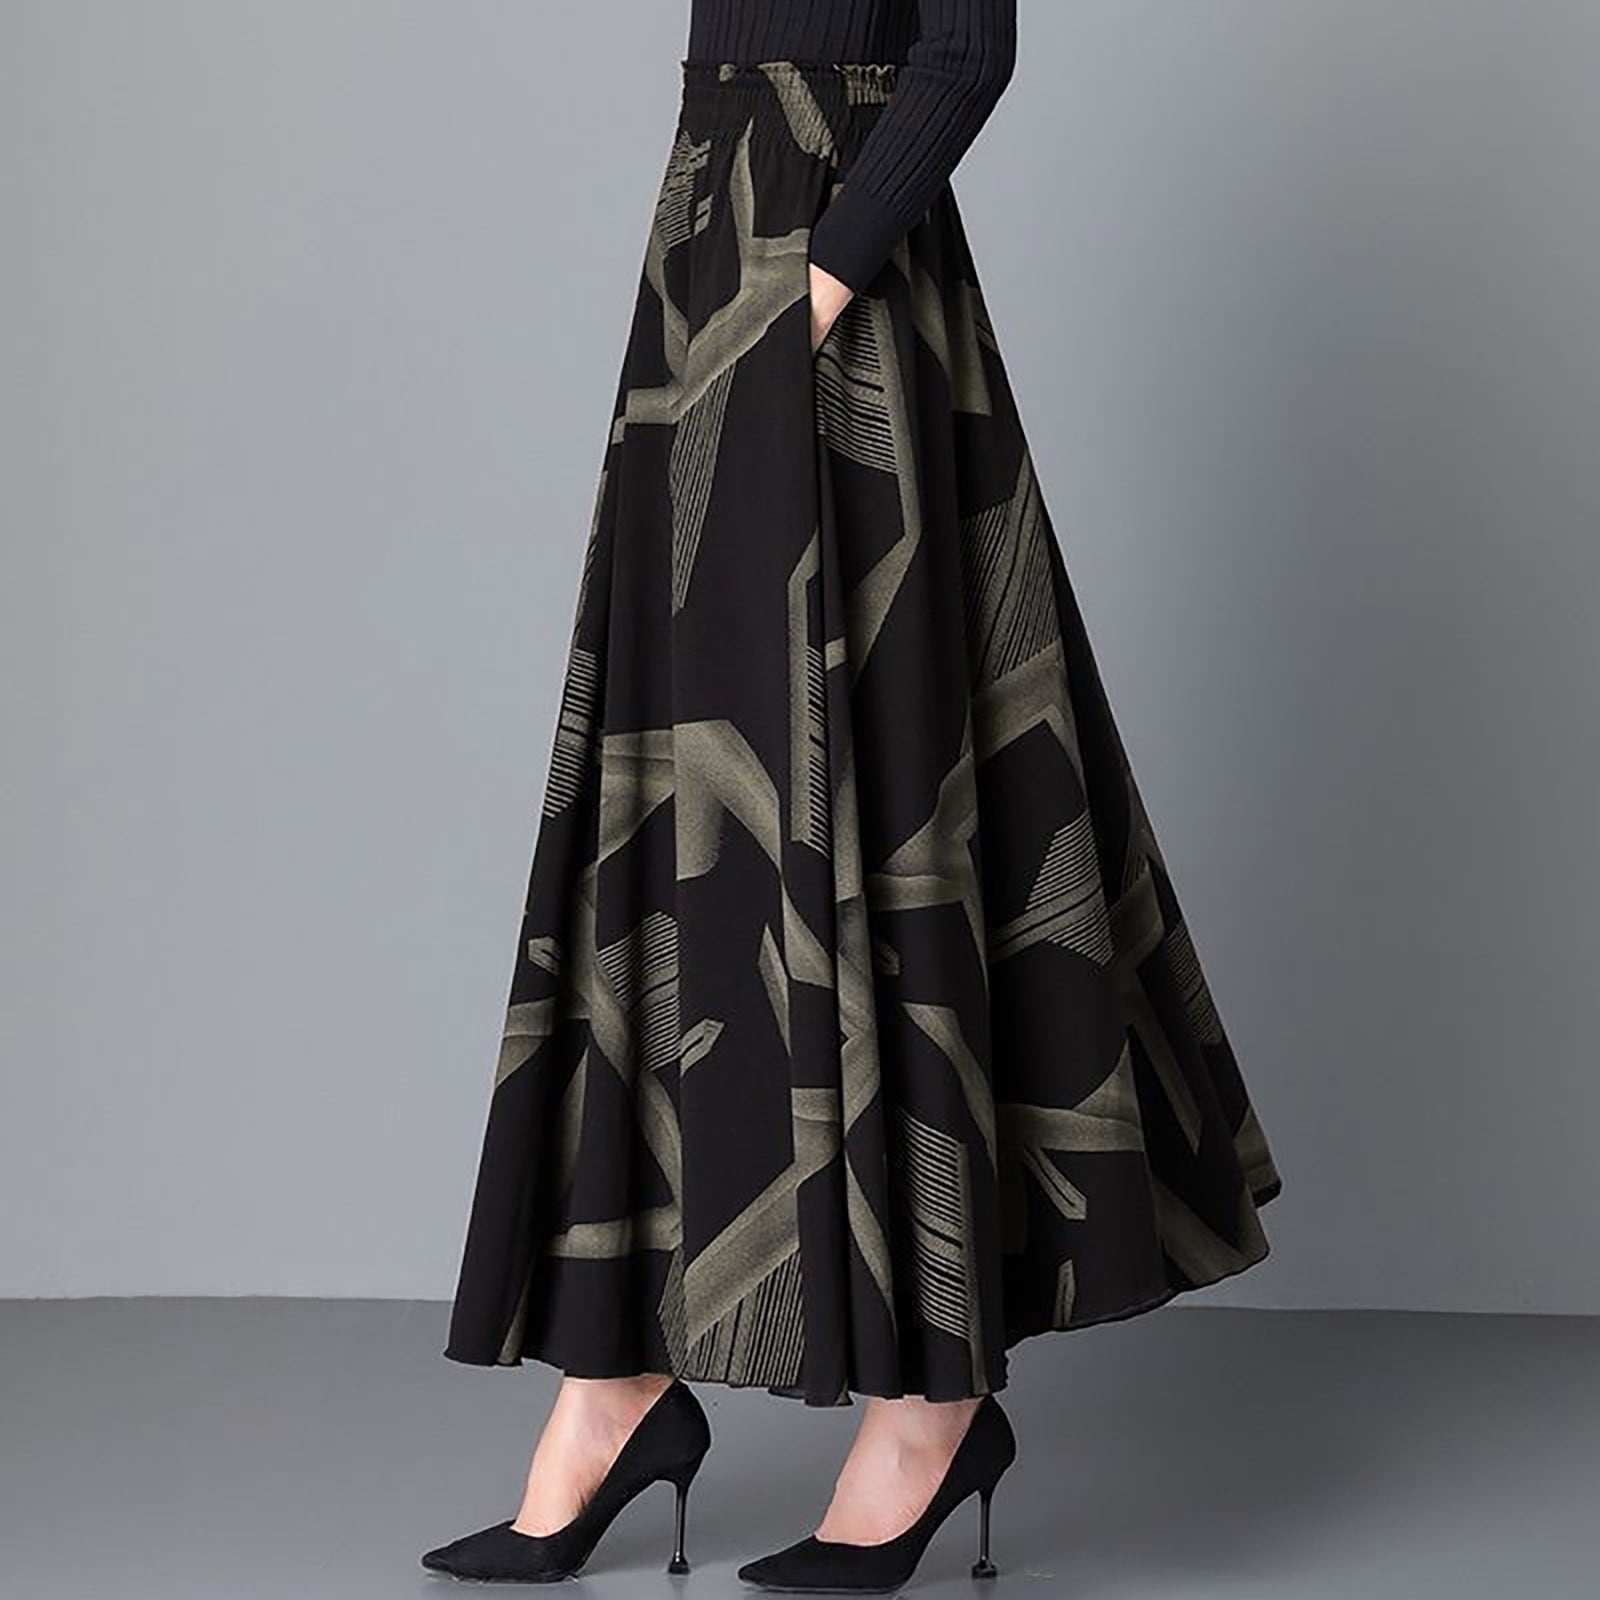 YUNAFFT Skirt for Women Plus Size Clearance Women Fashion Pocket Long ...